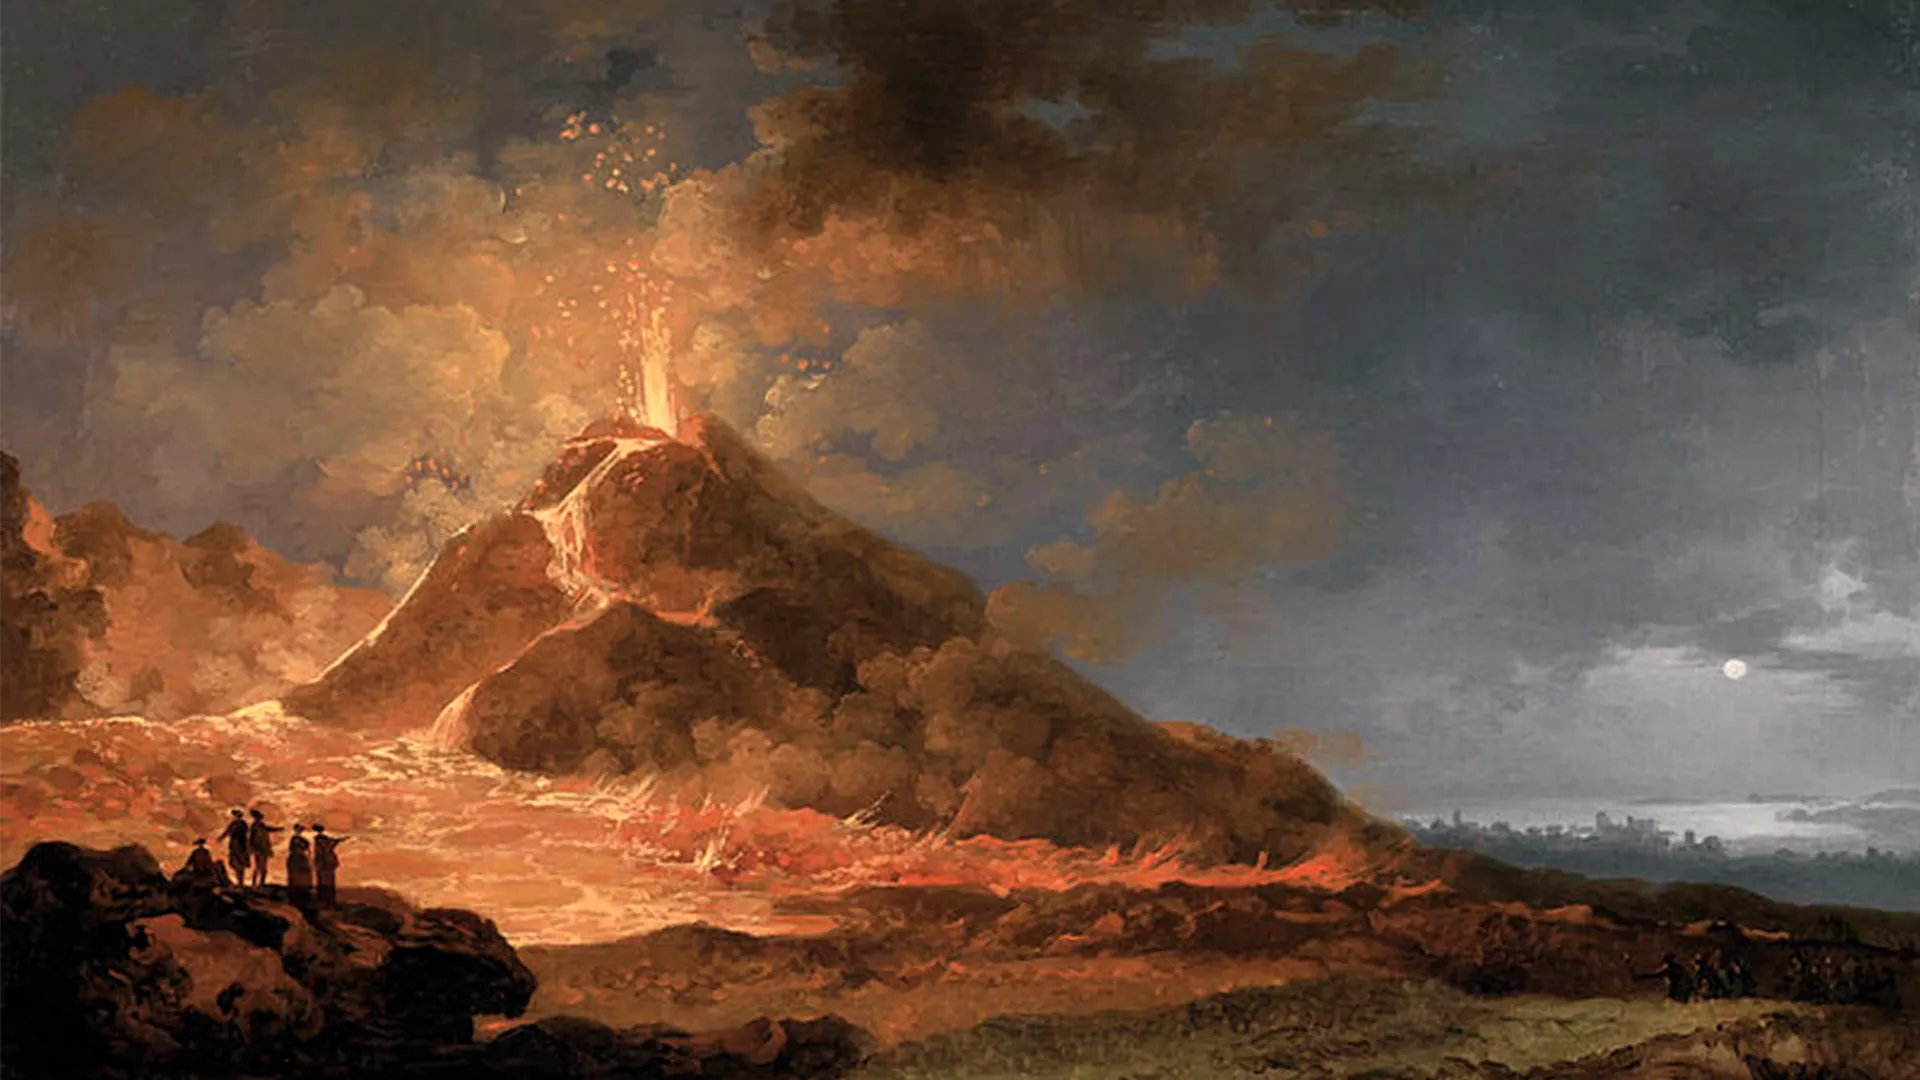 An artist rendering of Mt. Vesuvius erupting against a cloudy night sky